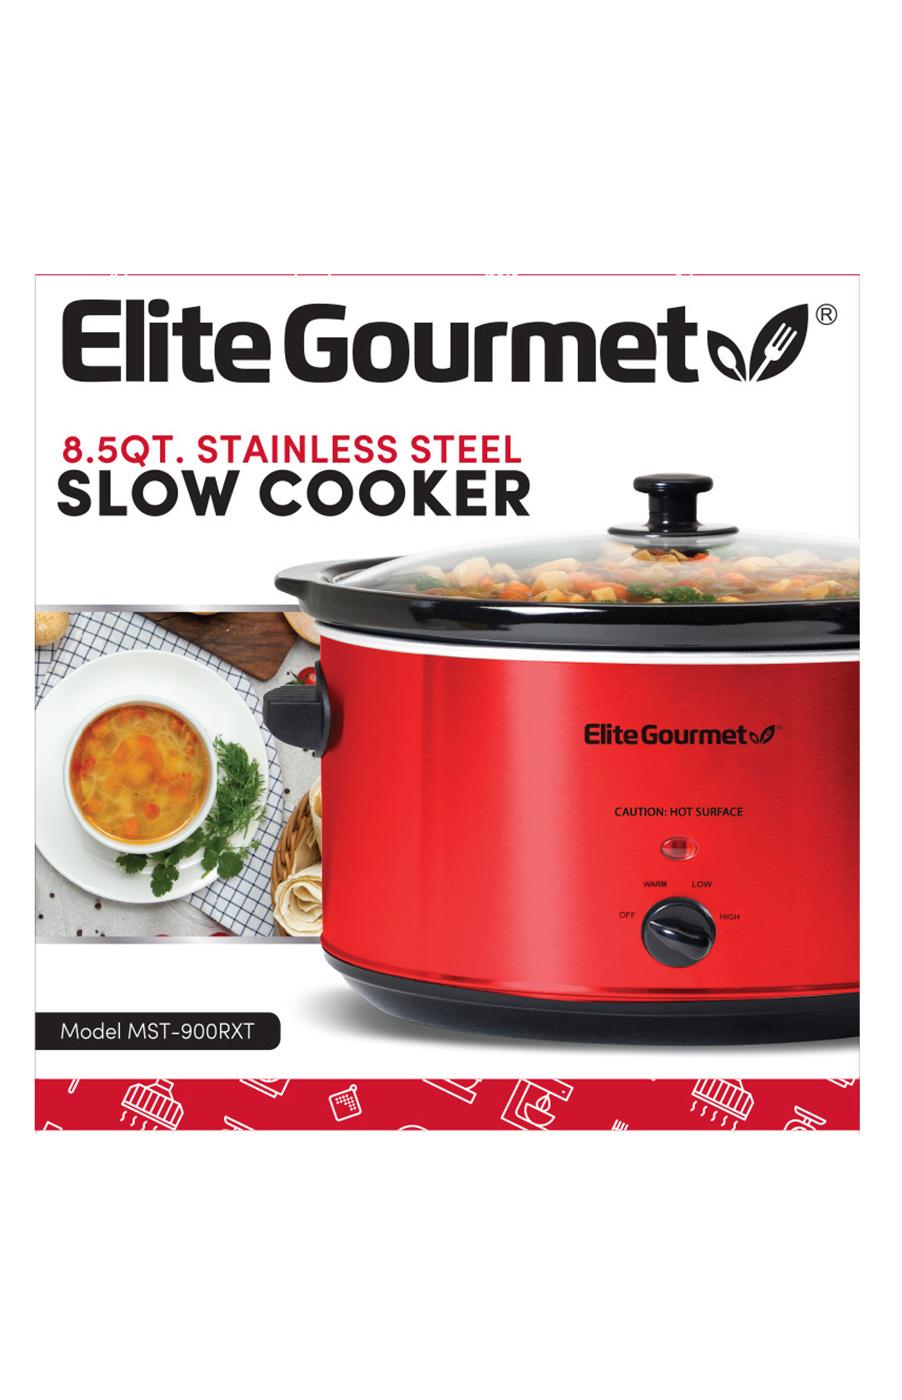 Elite Gourmet 8.5Qt. Stainless Steel Slow Cooker 